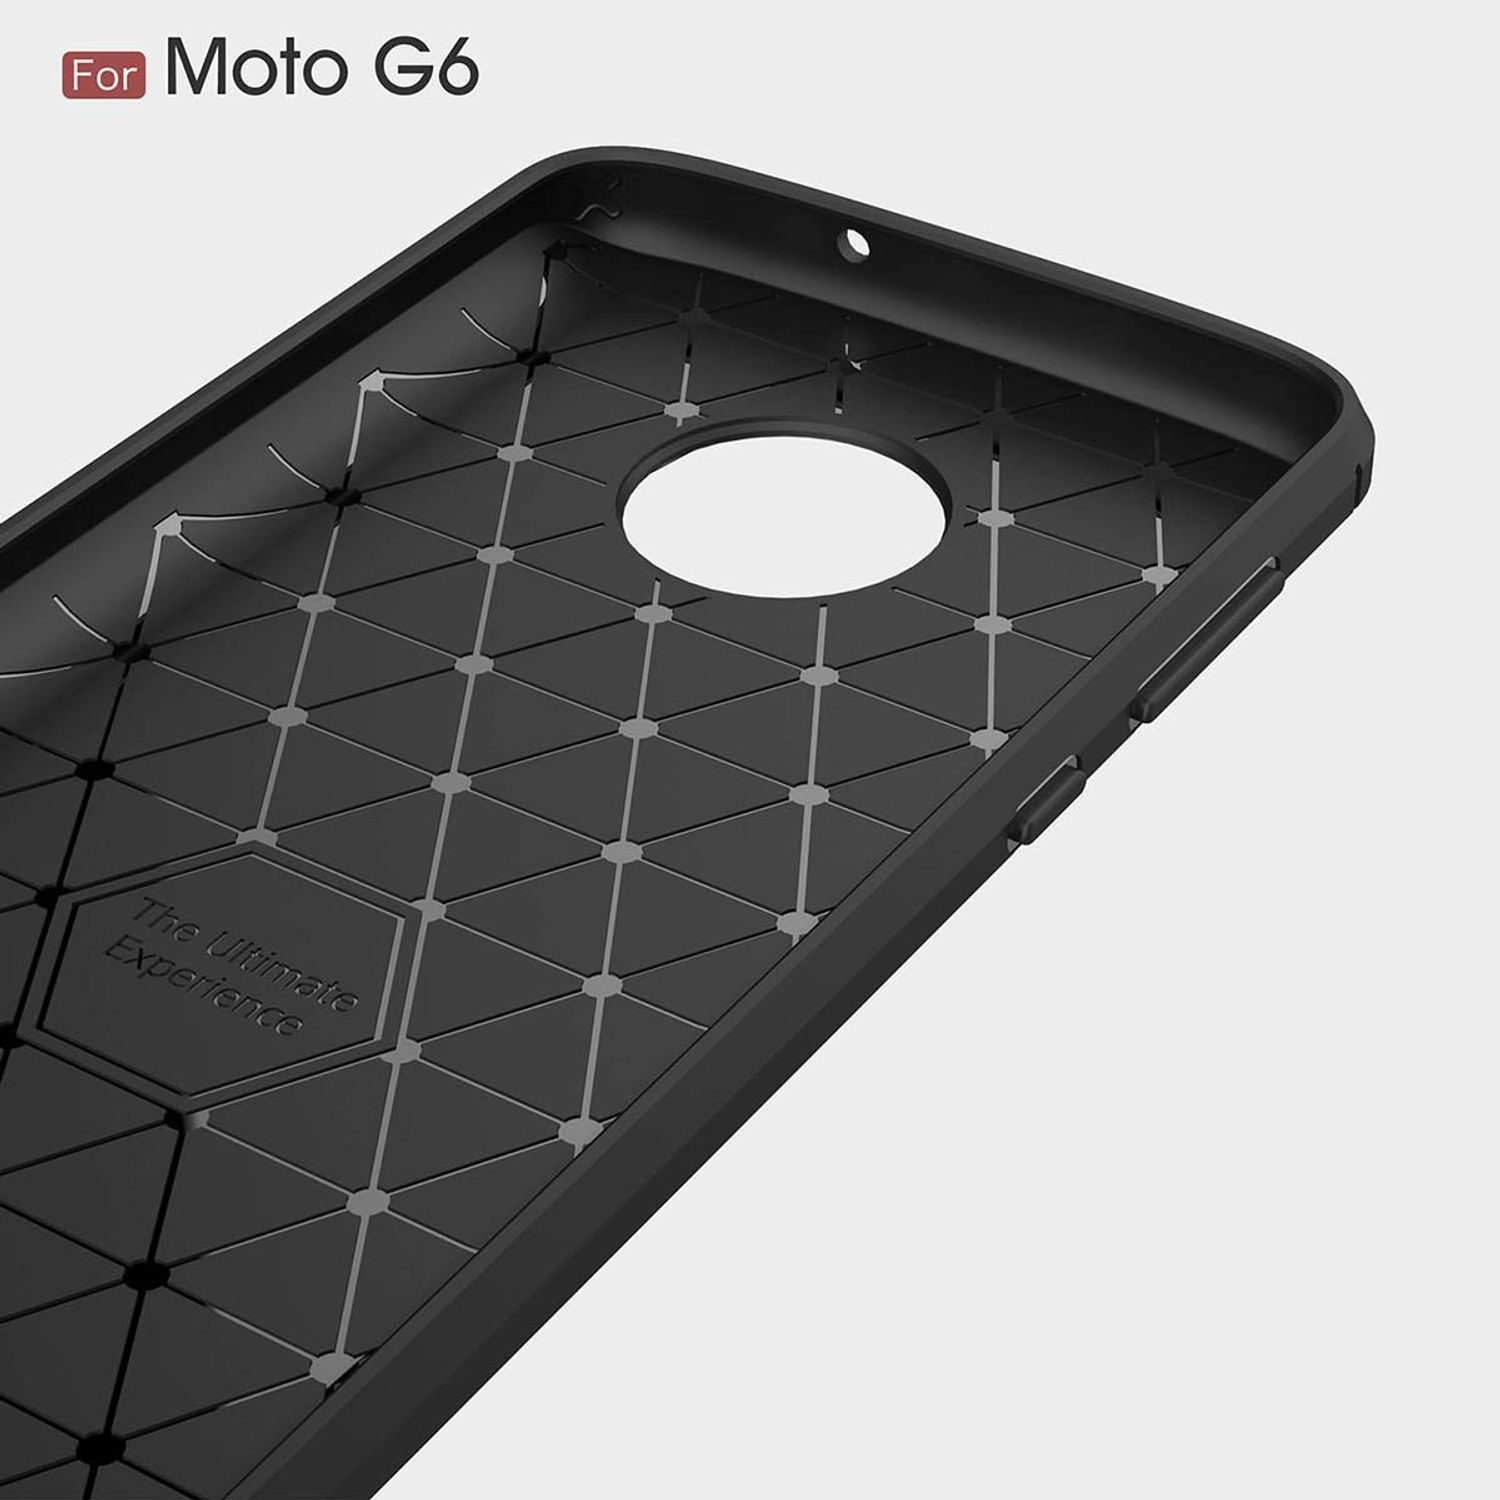 Moto Grau G6, KÖNIG DESIGN Motorola, Backcover, Schutzhülle,